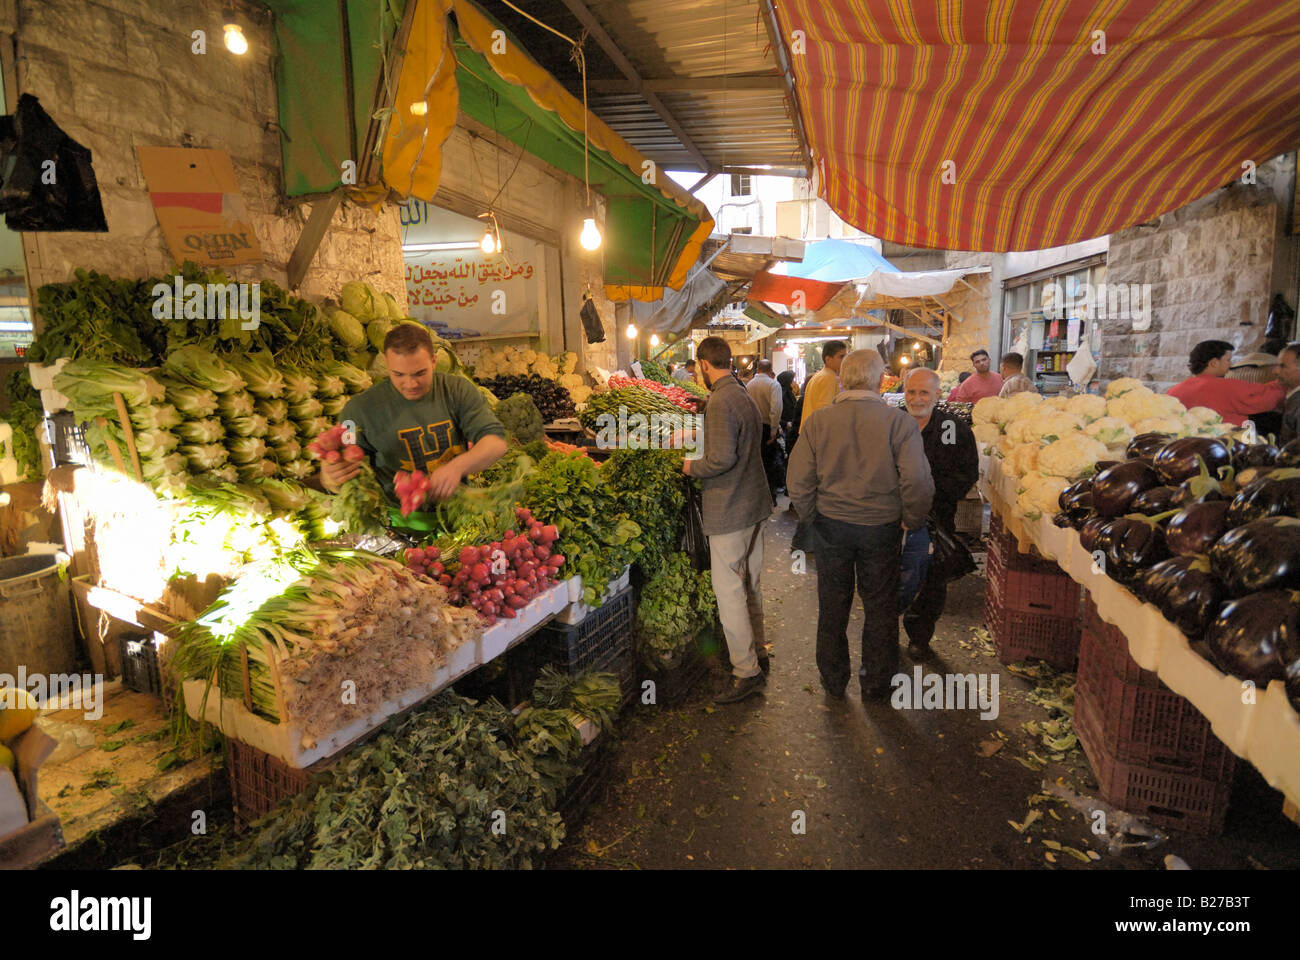 Fruit and vegetable market, Amman, Jordan, Arabia Stock Photo